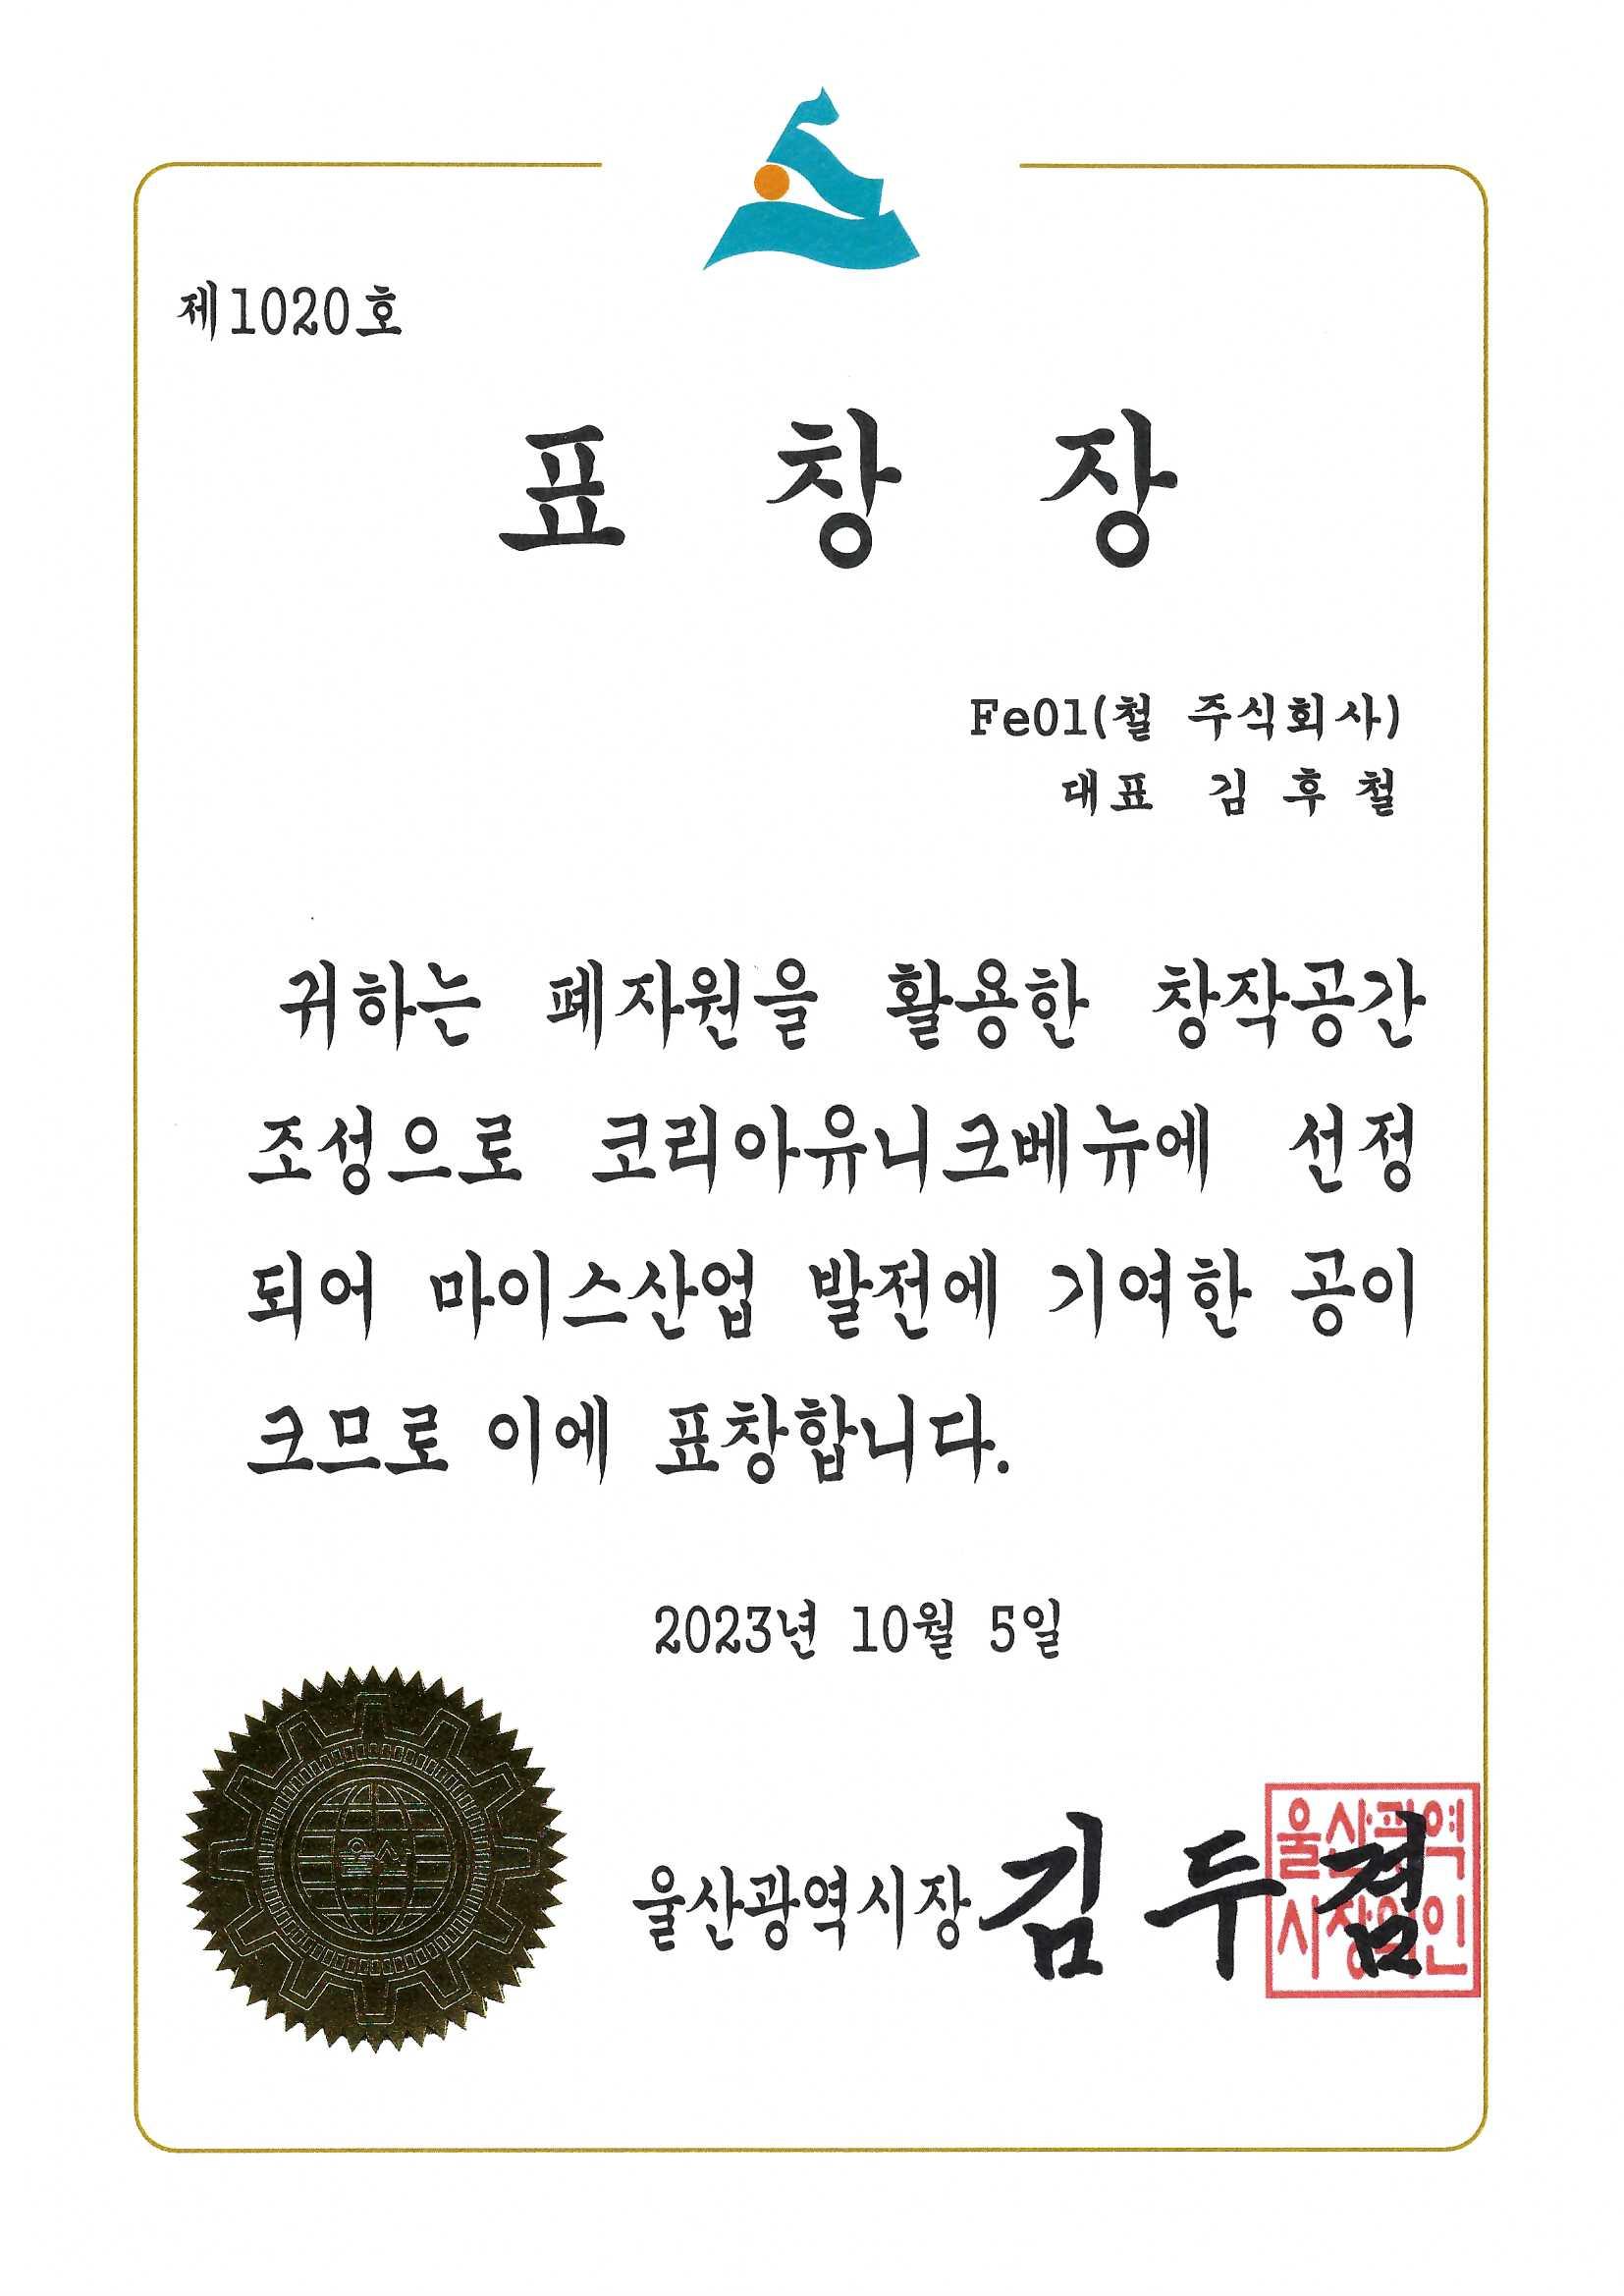 Ulsan City Citation